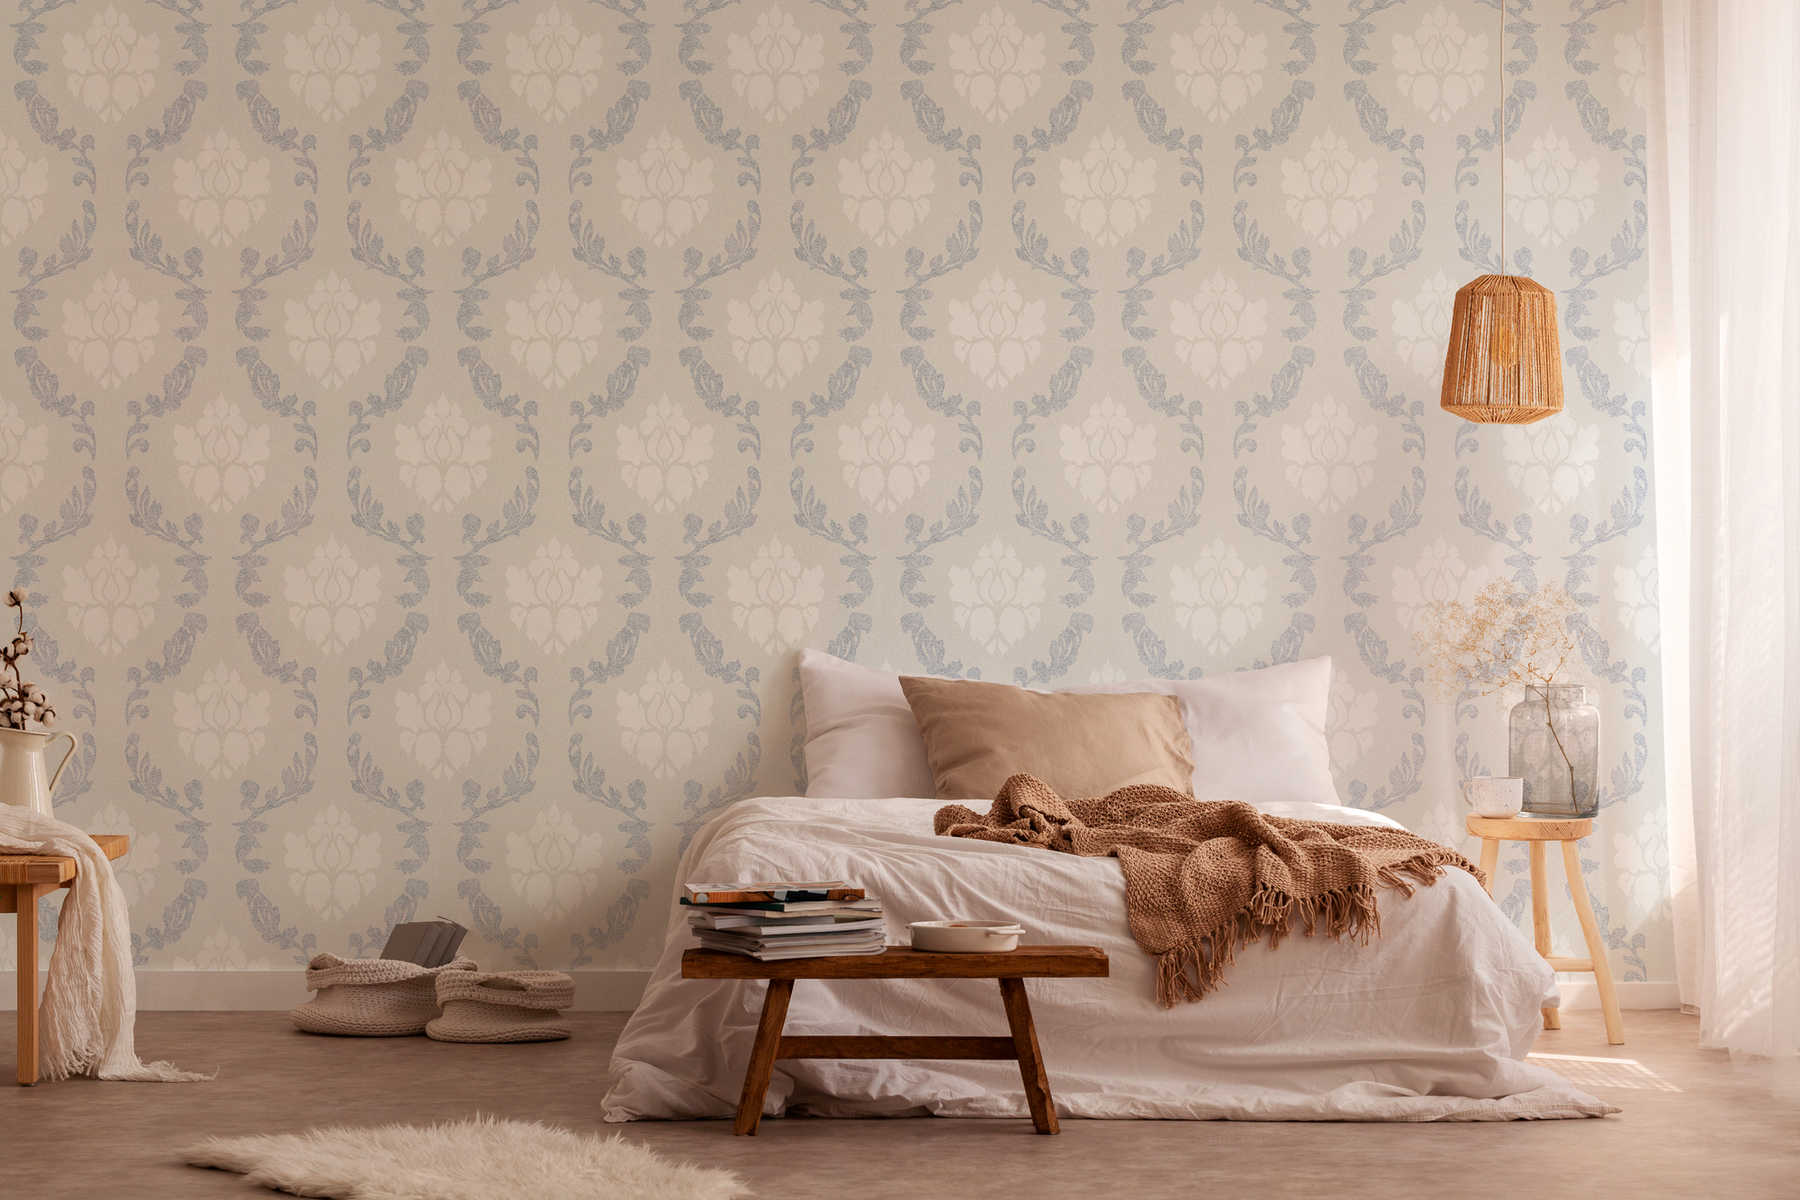             Ornament wallpaper with linen look - beige, cream, blue
        